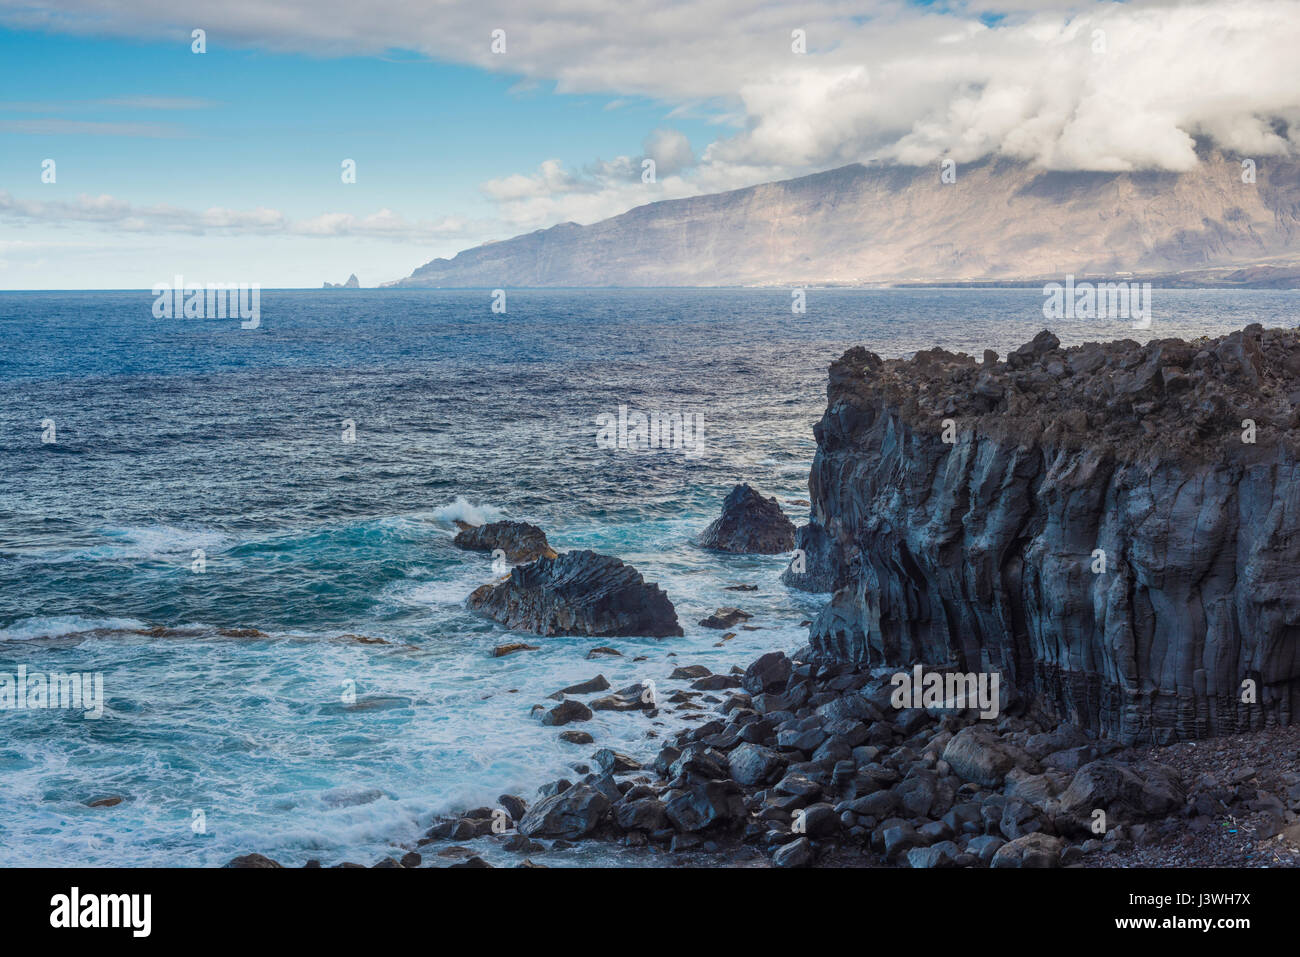 View over El Golfo embayment, El Hierro, Canary Islands, towards the giant cliff of Fuga de Gorreta from Pozo de la Salud Stock Photo